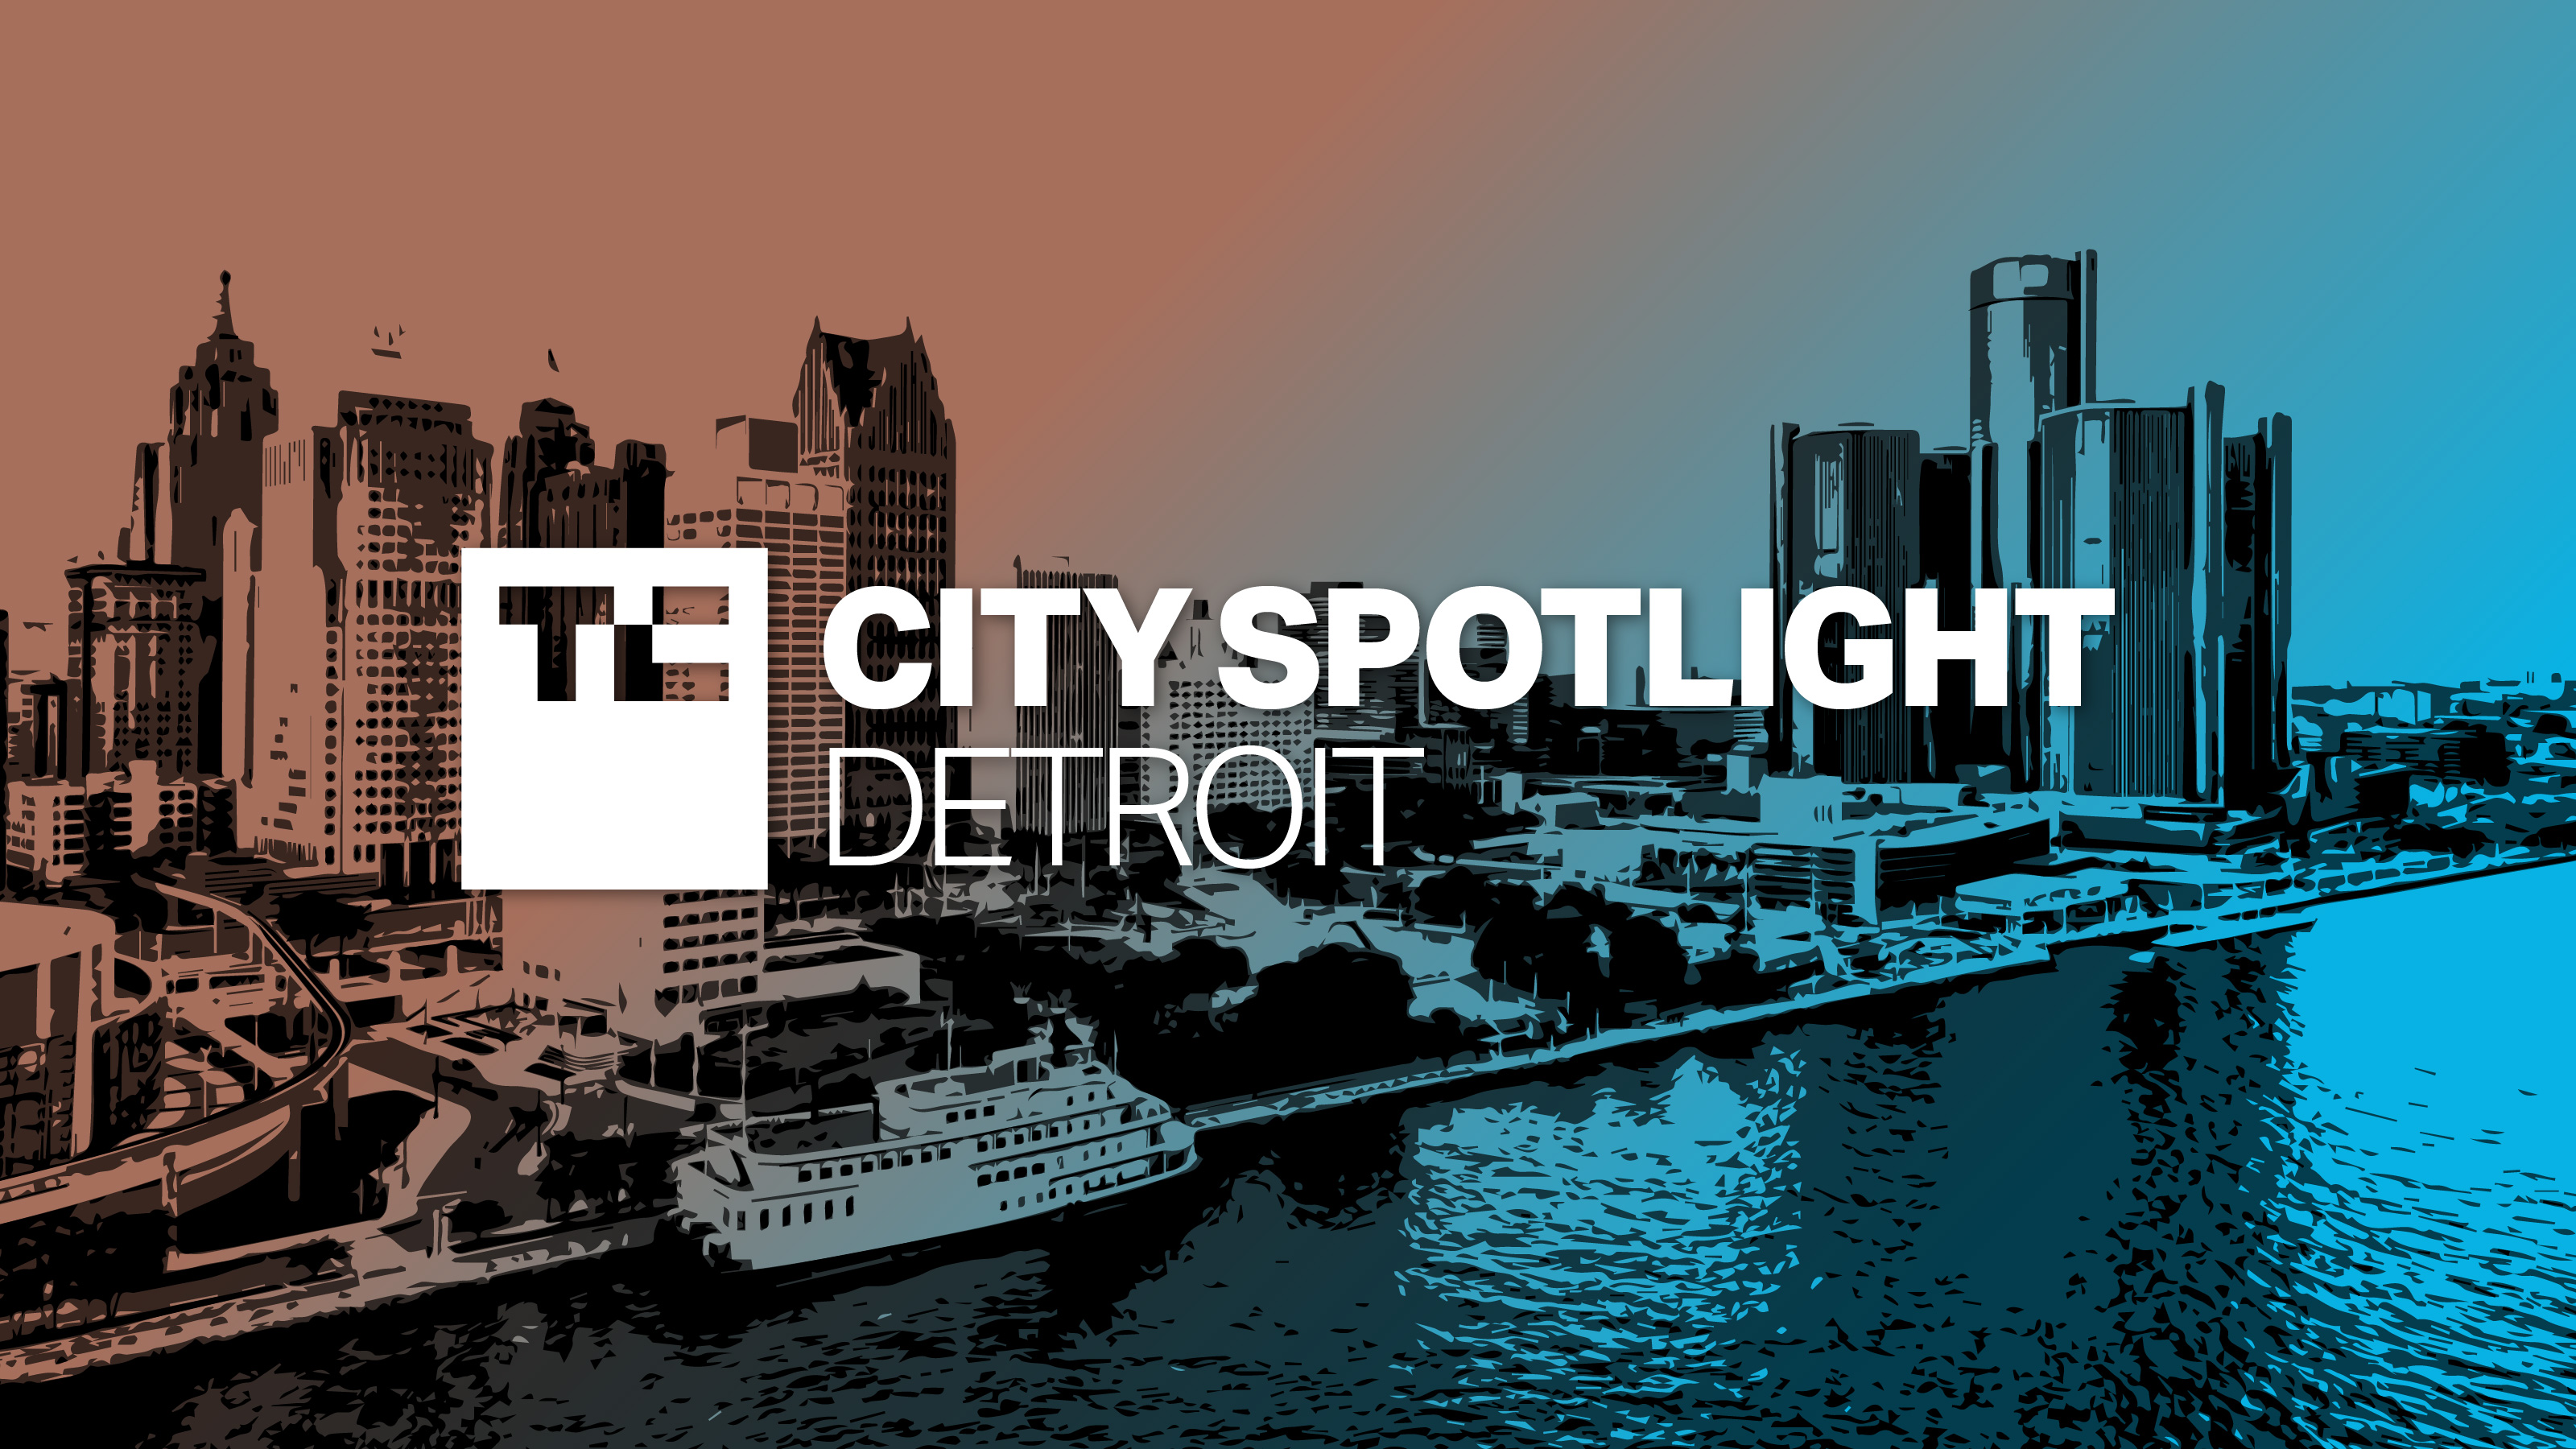 Detroit City Spotlight logo over photo illustration of downtown Detroit